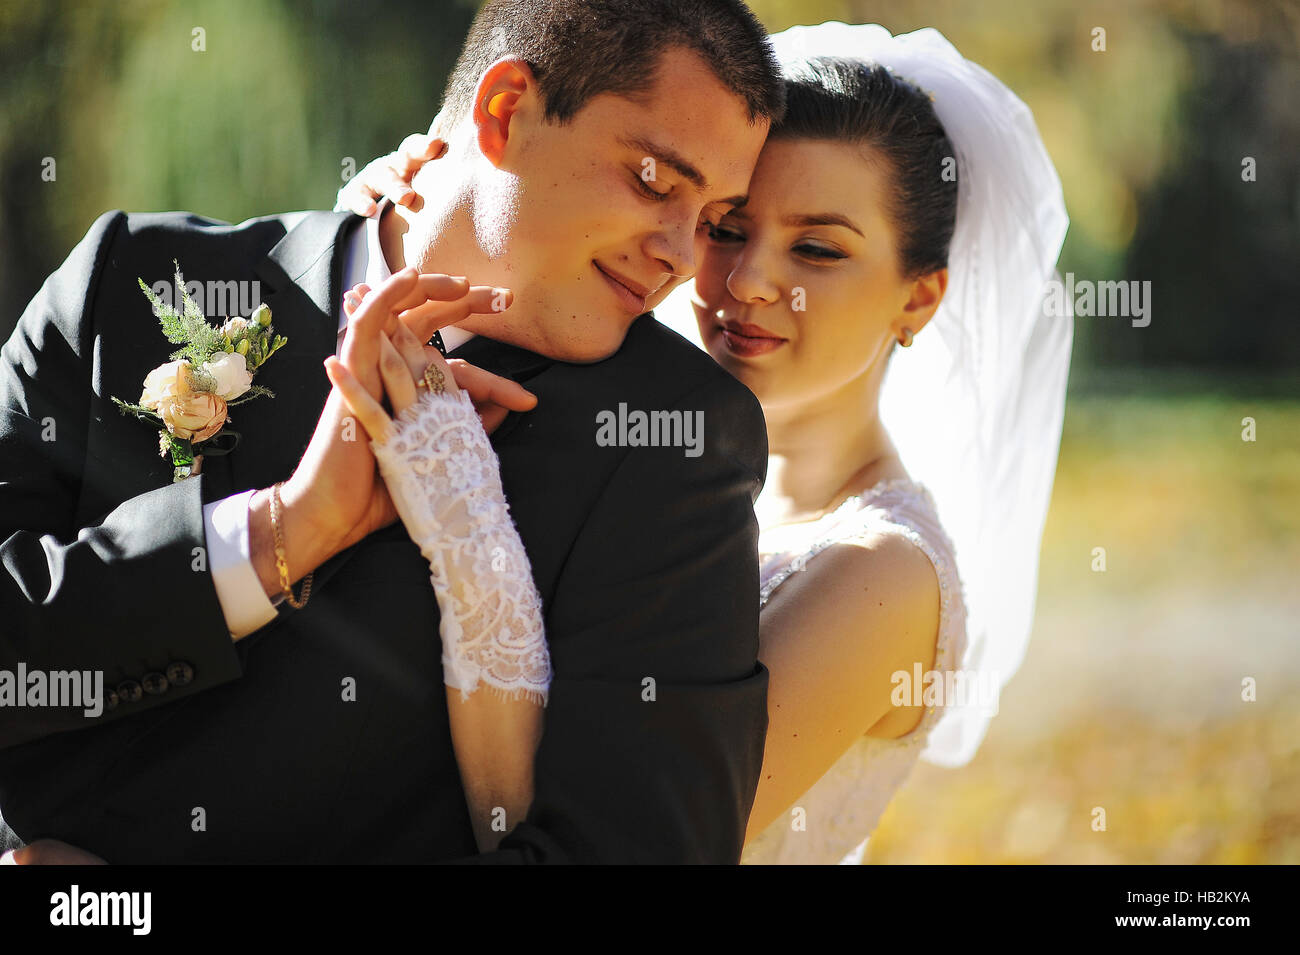 Glowing wedding couple embrace close up Stock Photo